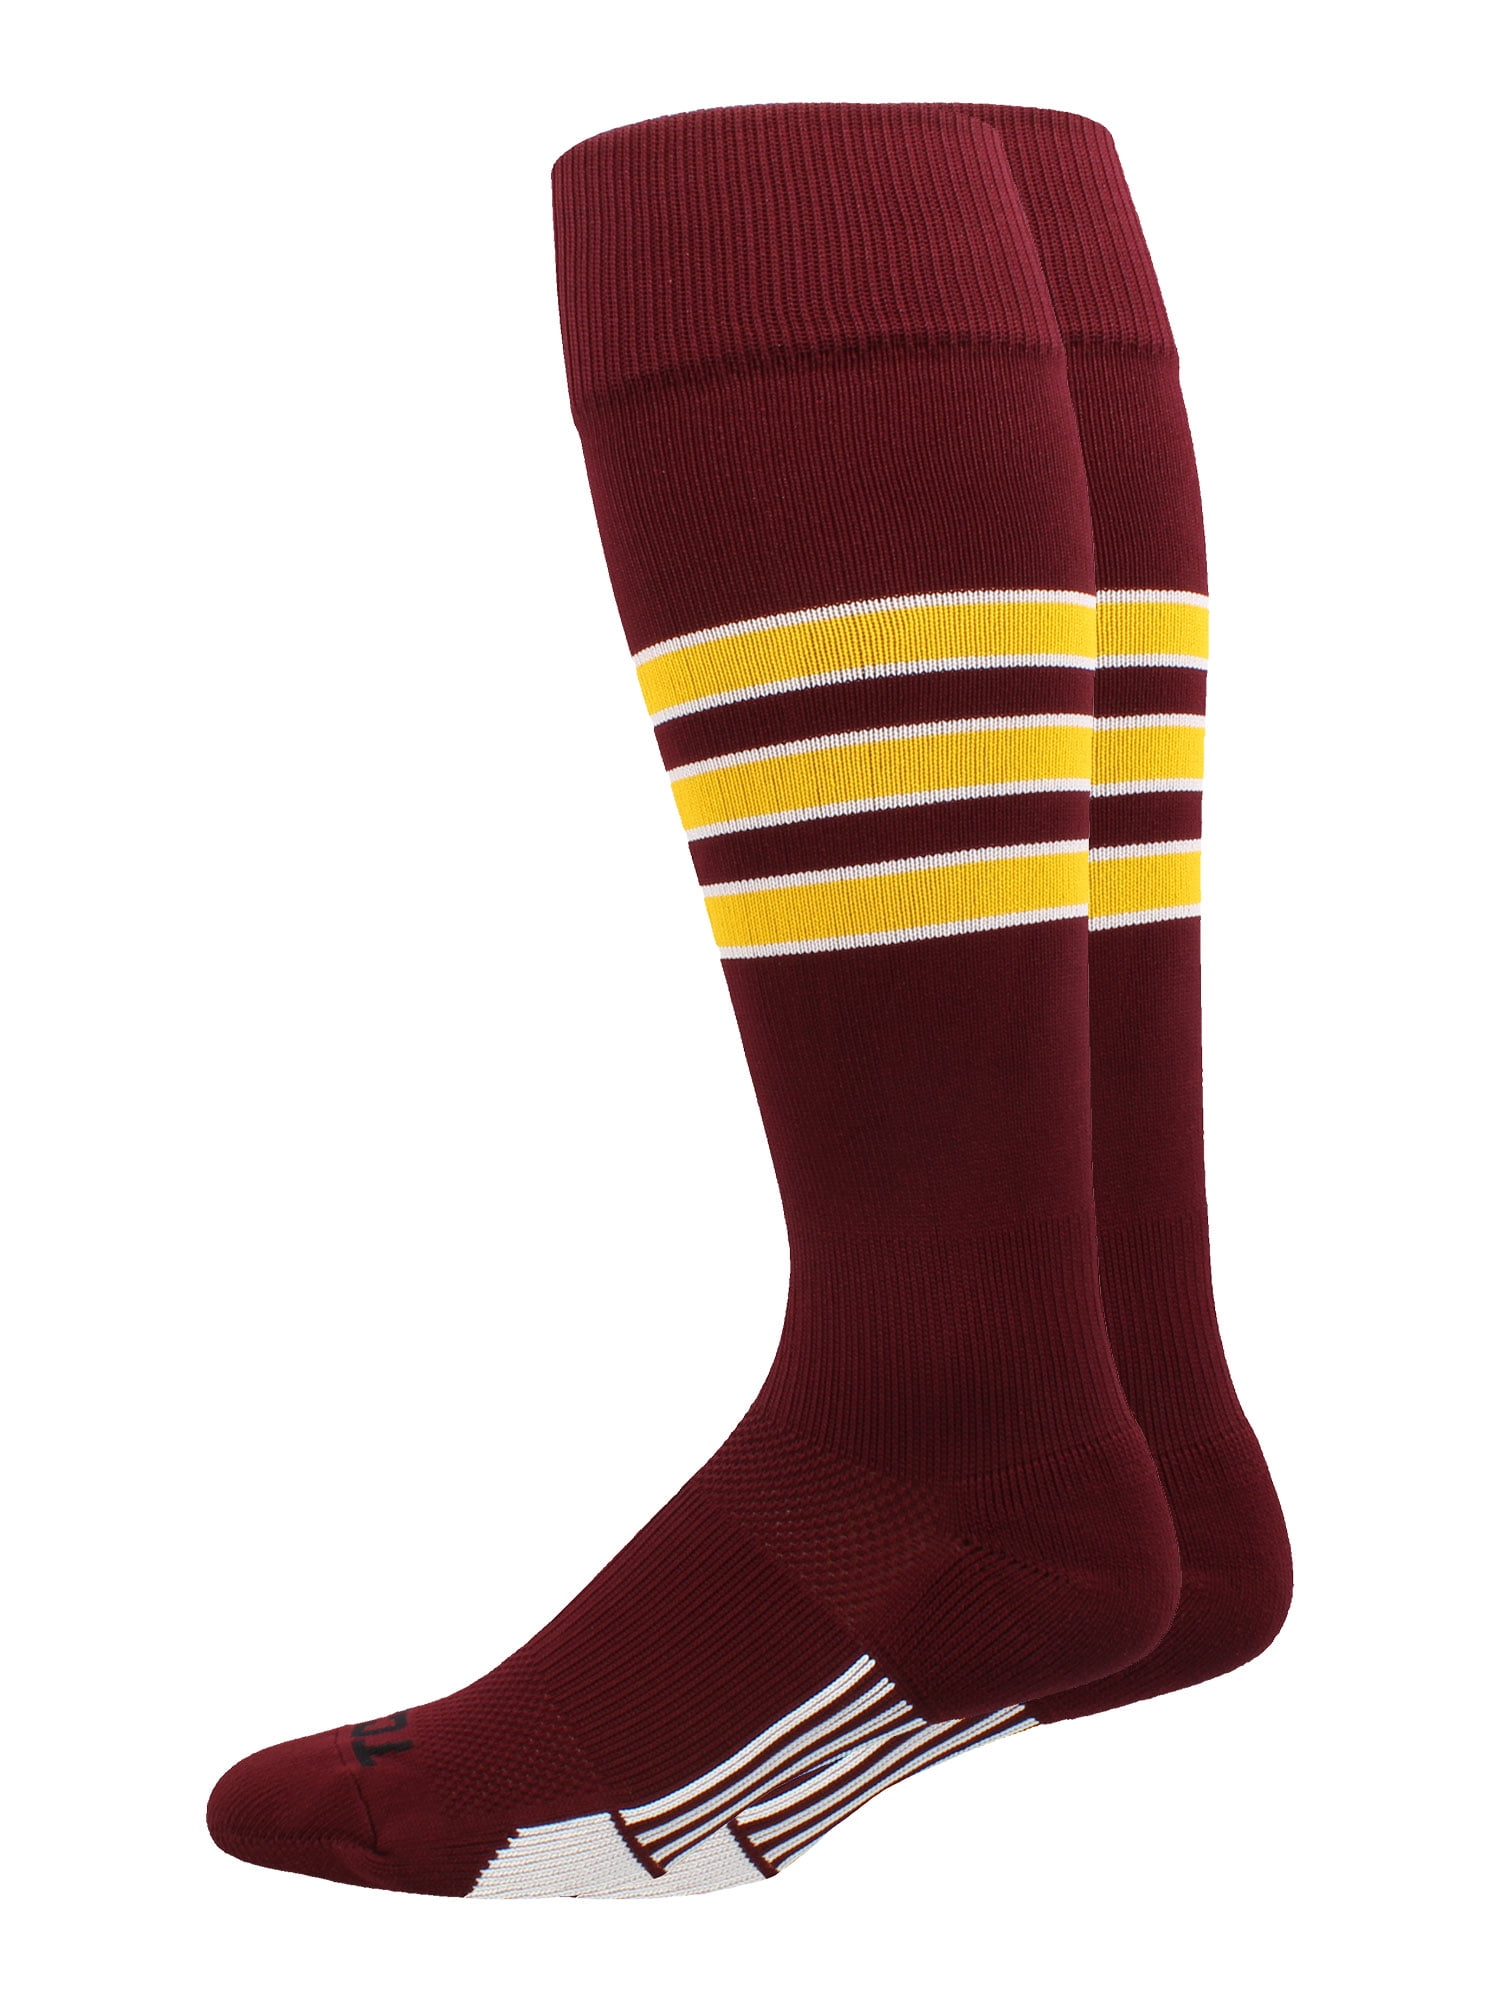 TCK - Dugout 3 Stripe Softball Socks (Maroon/Gold/White, Large ...